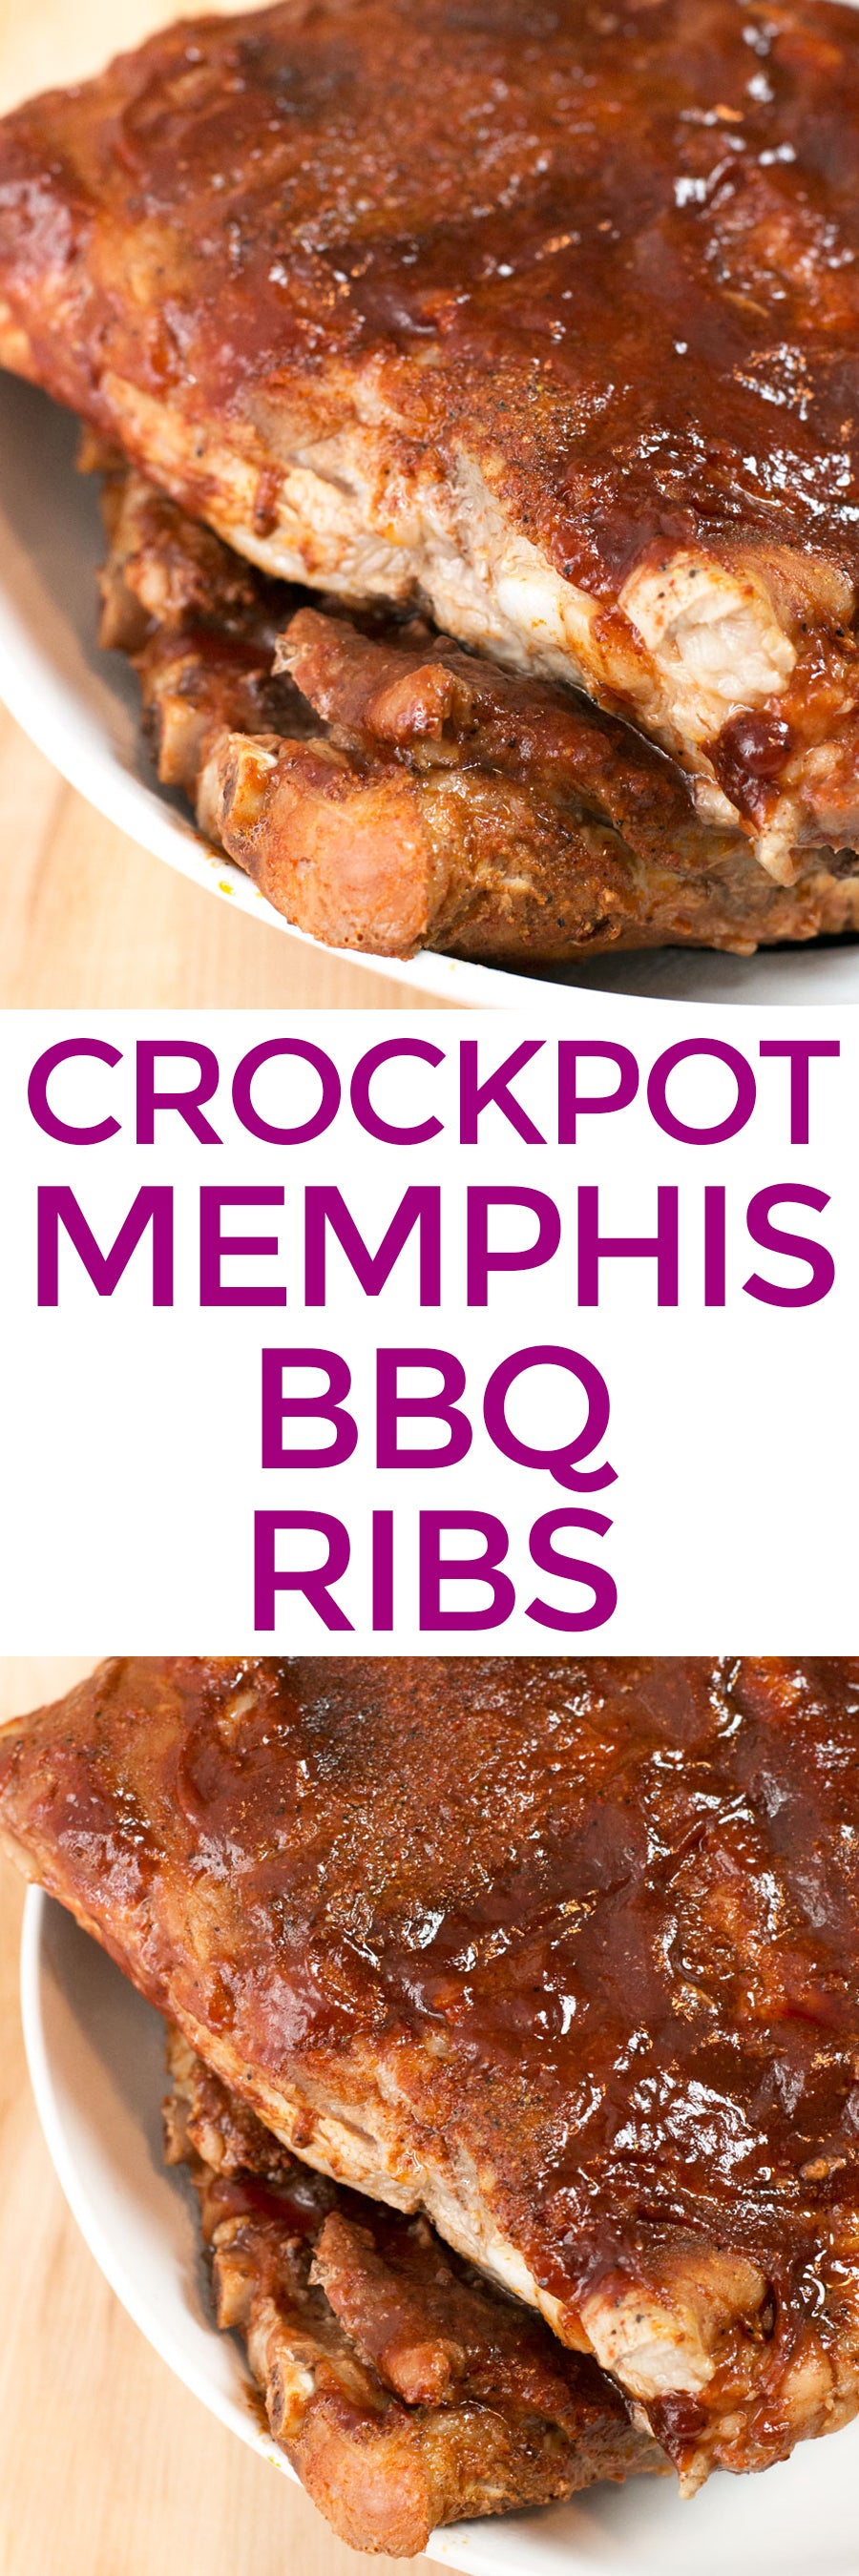 Crockpot Memphis Style BBQ Ribs | pigofthemonth.com #bbq #barbecue